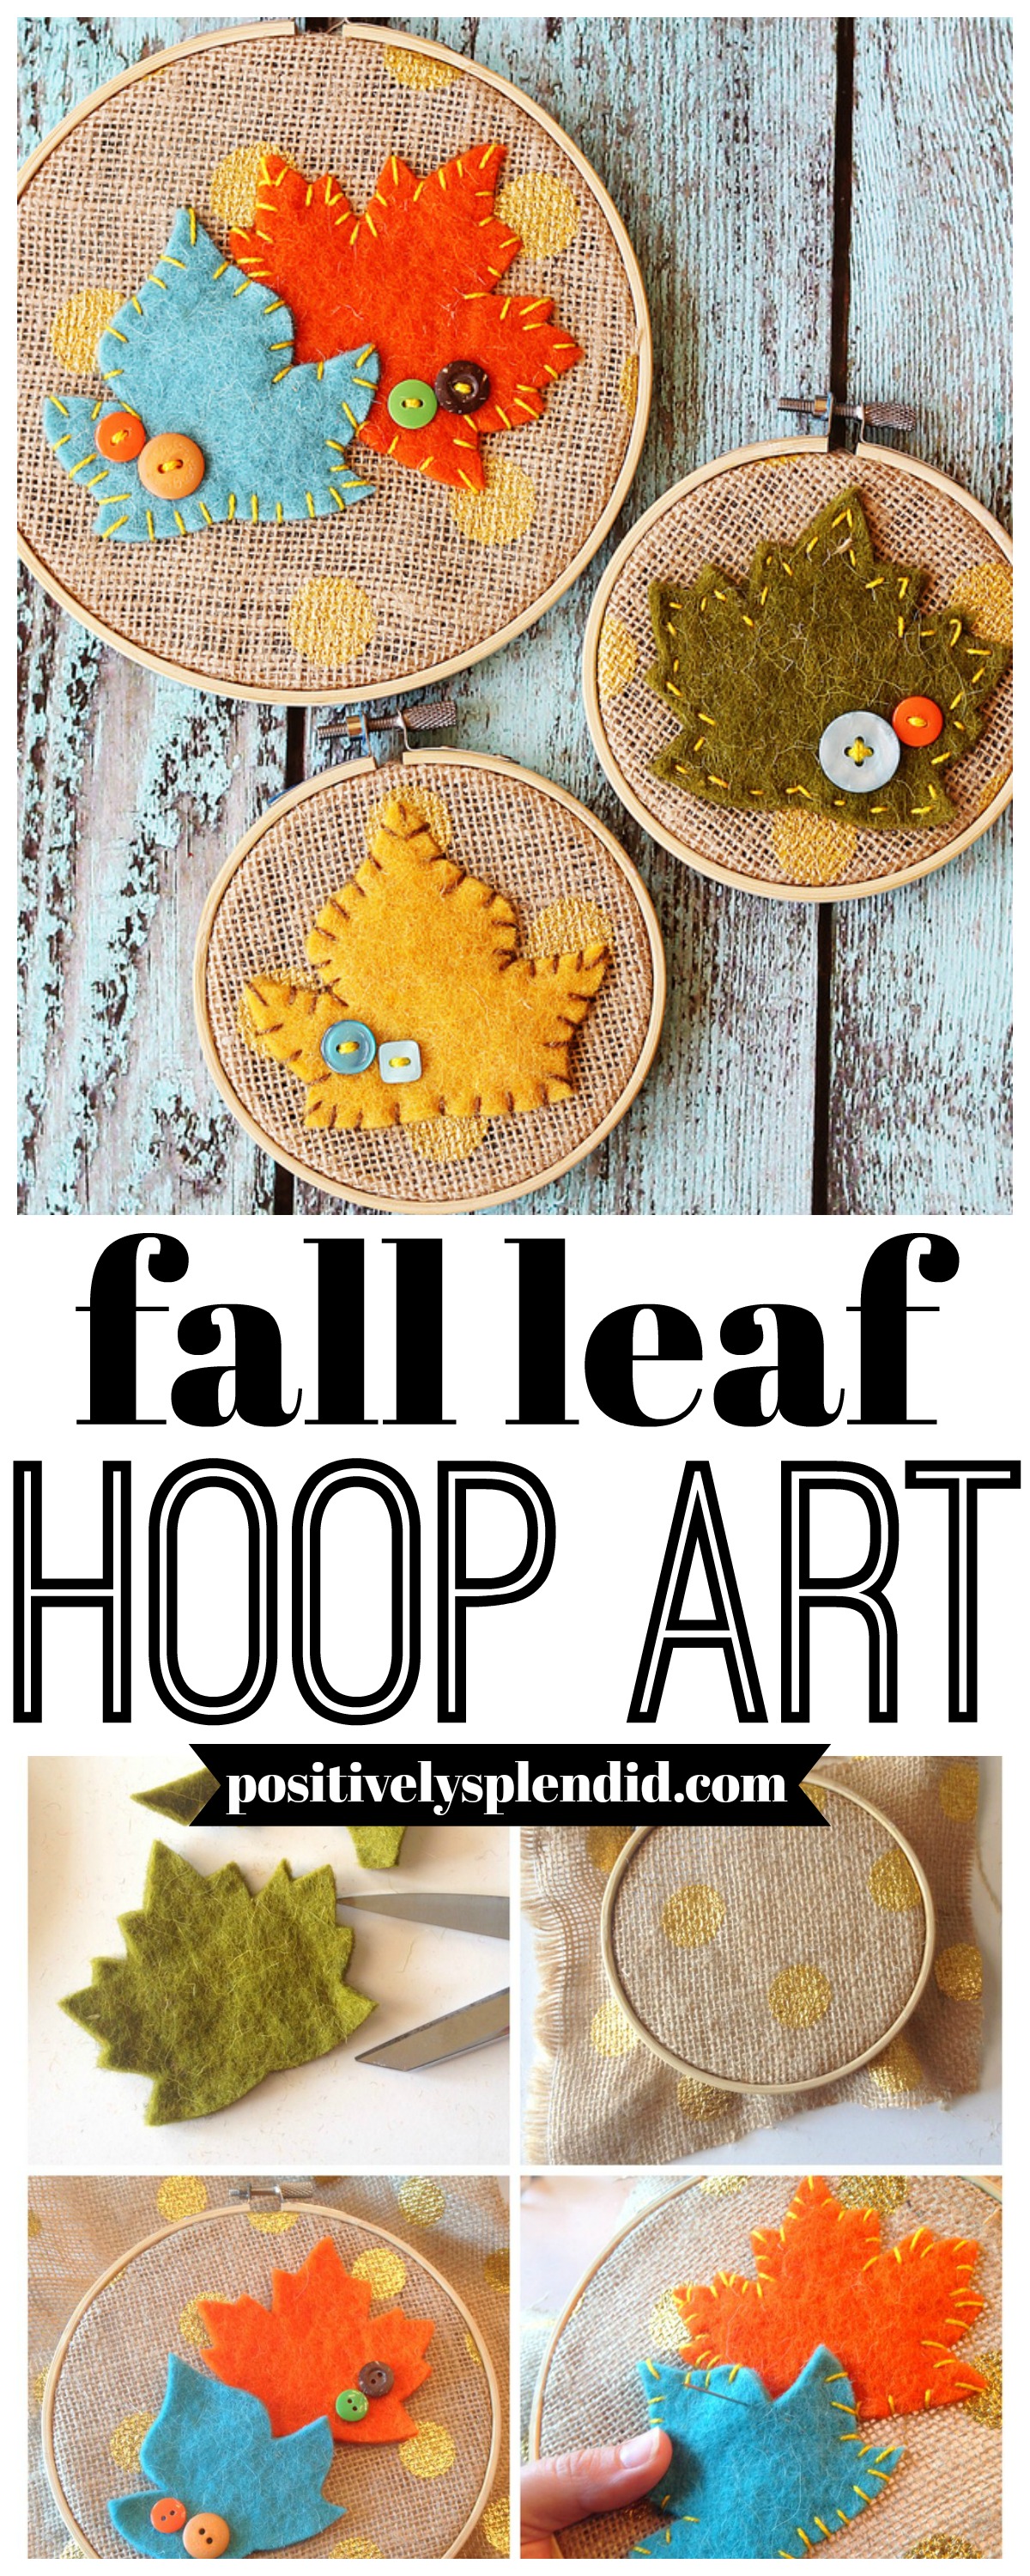 Fall Leaf Hoop Art